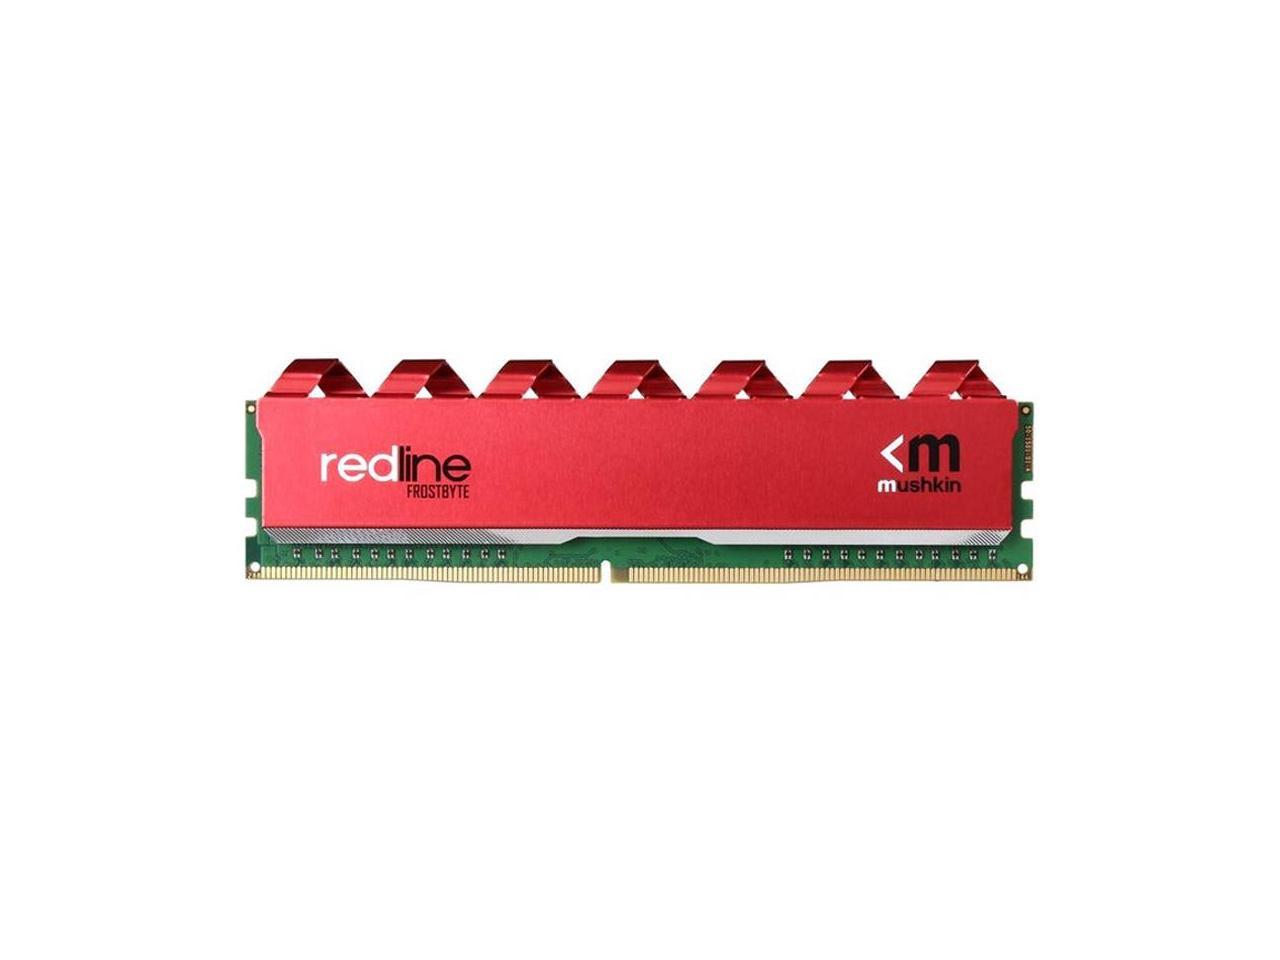 16GB Mushkin Redline Frostbyte DDR4 3600MHz PC4-28800 CL18 1.35V Dual Channel Kit (2x 8GB)